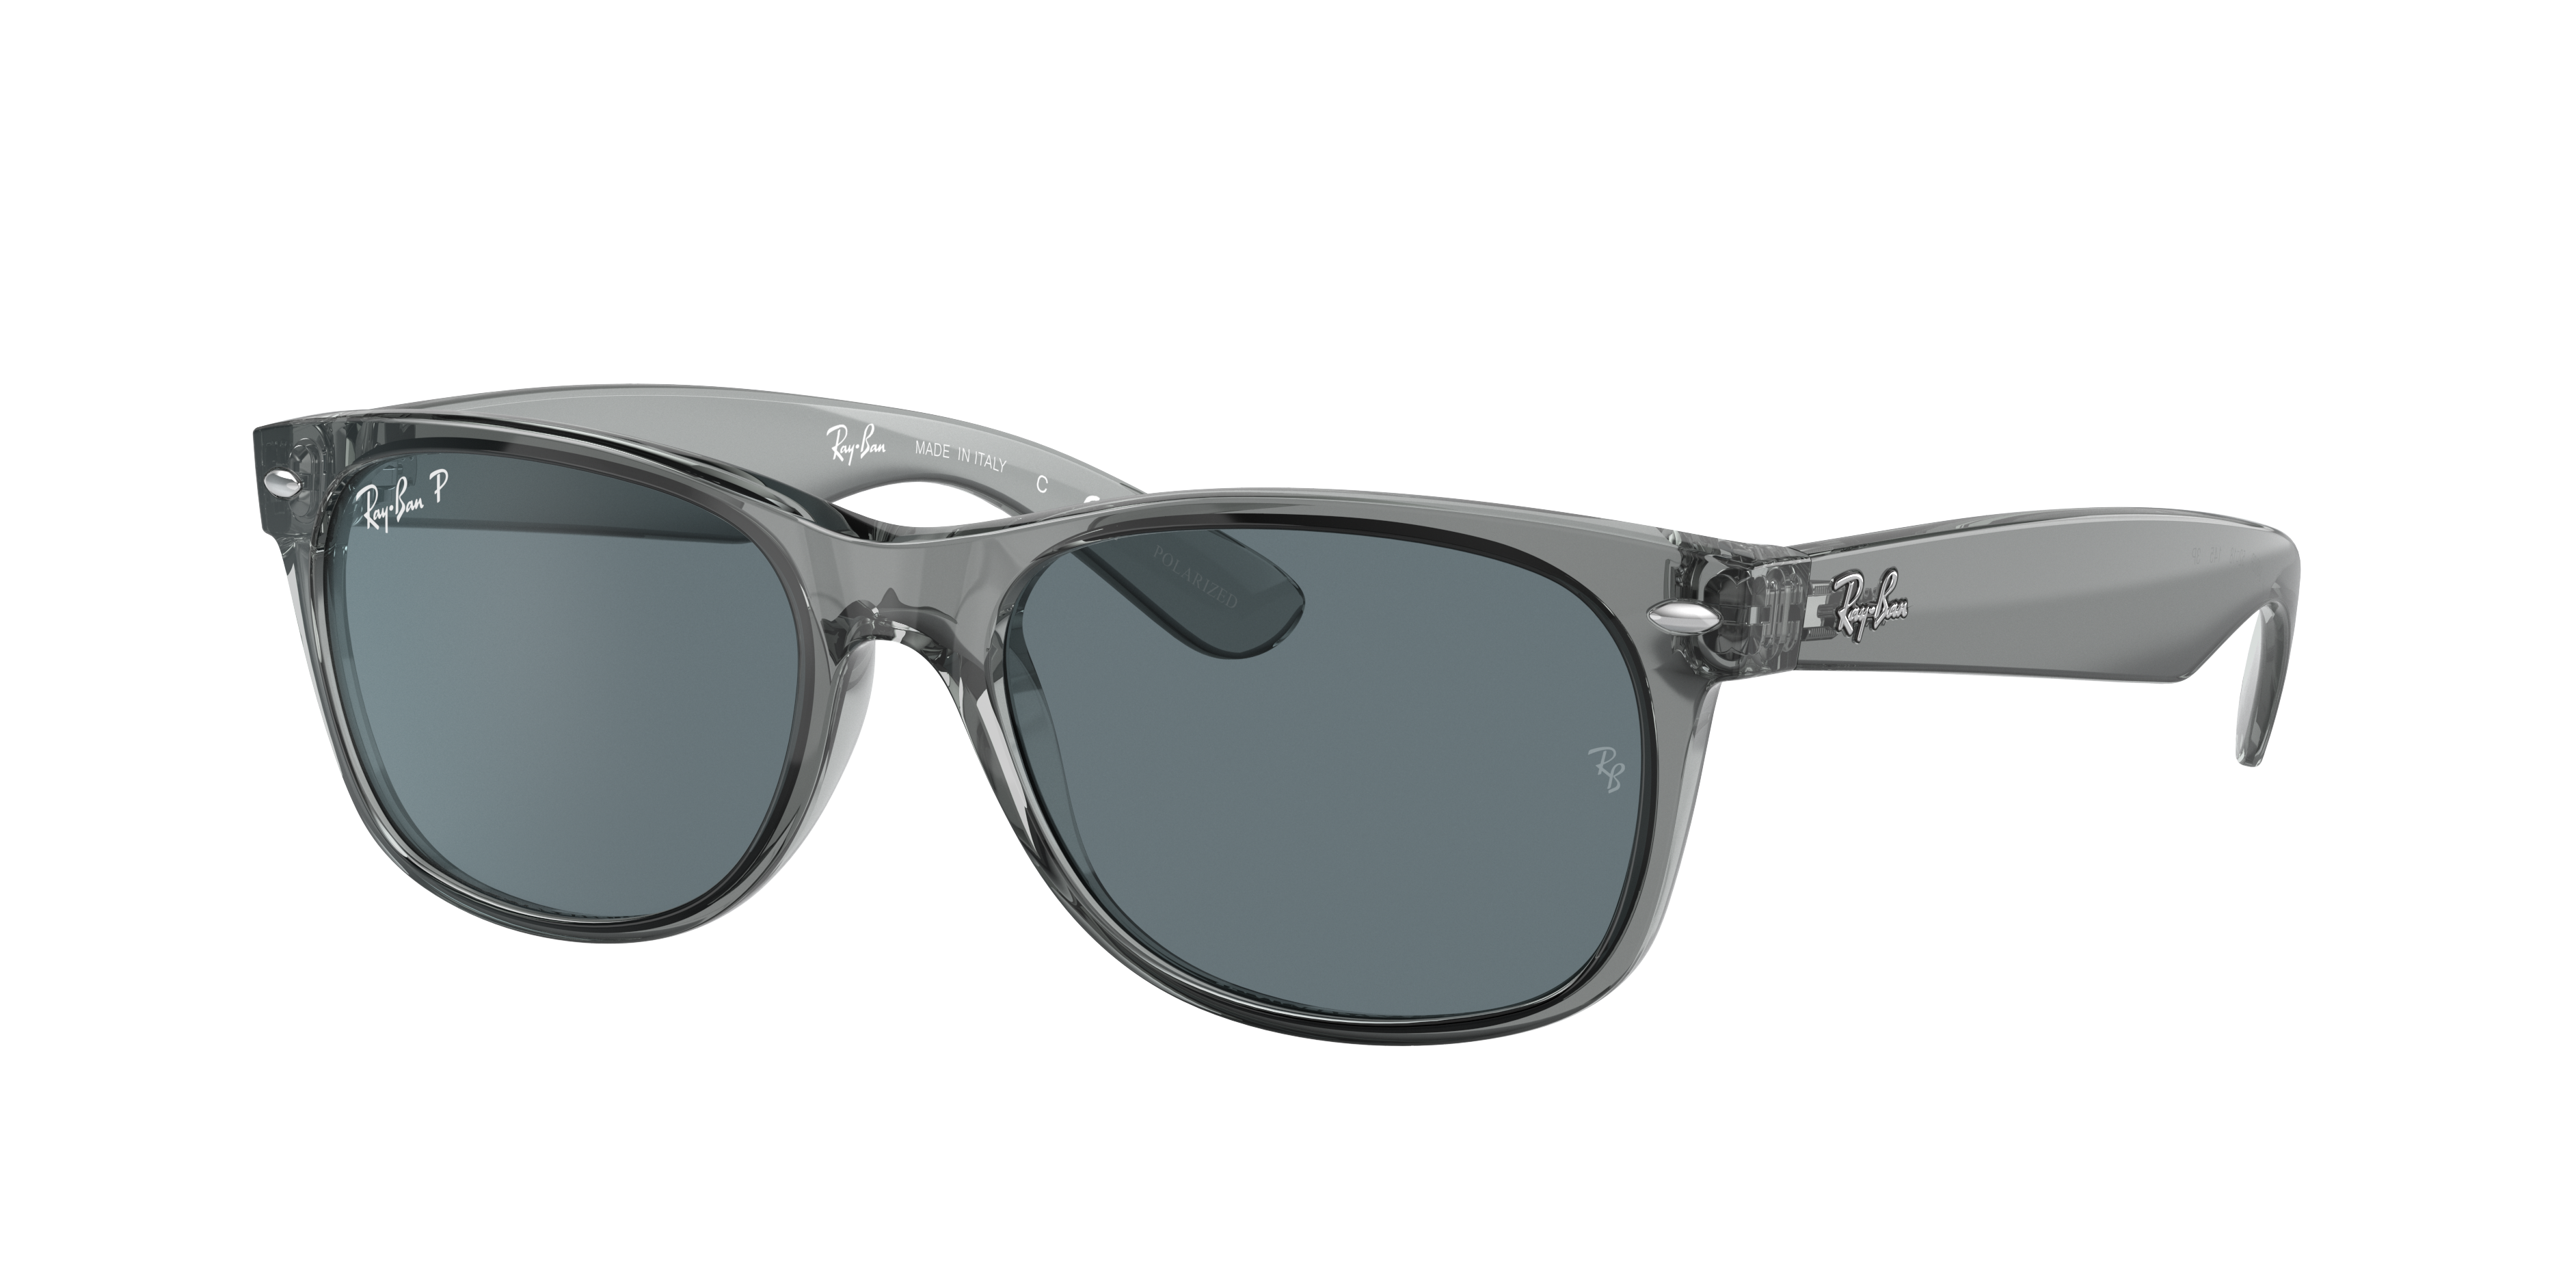 knoop Plakken Intensief New Wayfarer Classic Sunglasses in Transparent Grey and Blue | Ray-Ban®